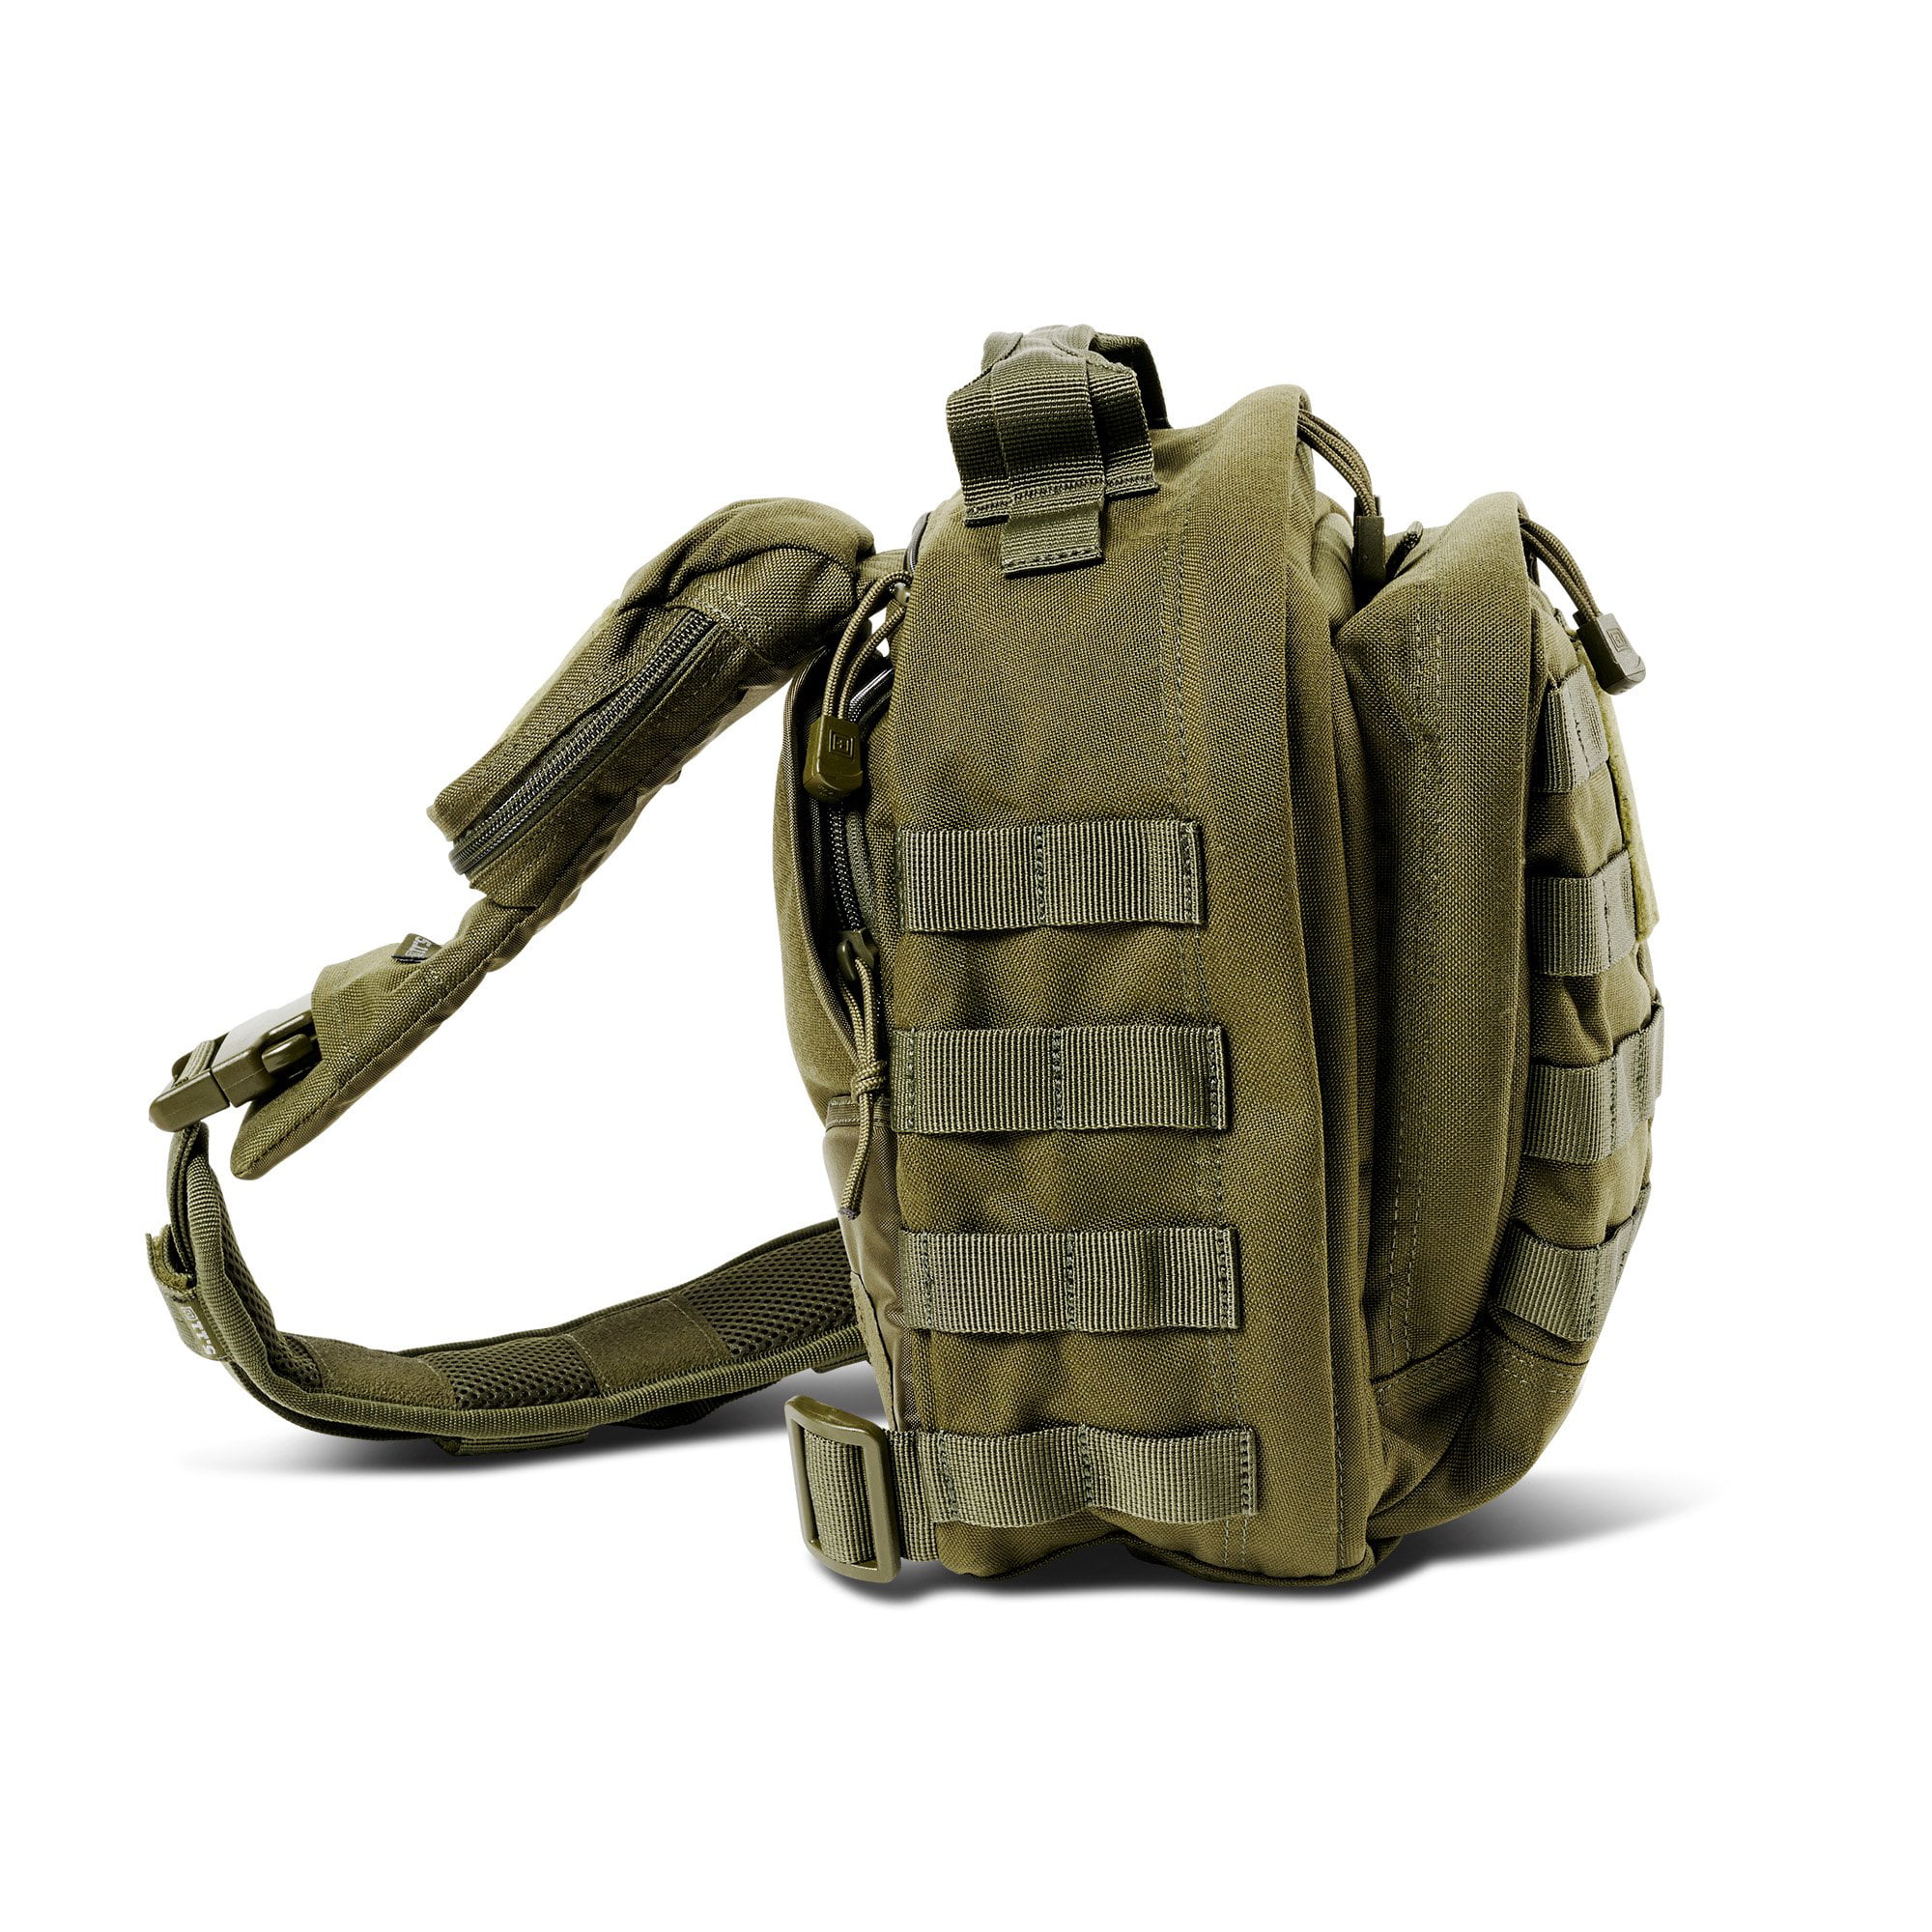 5.11 Tactical Rush MOAB 8 Sling Pack 13L